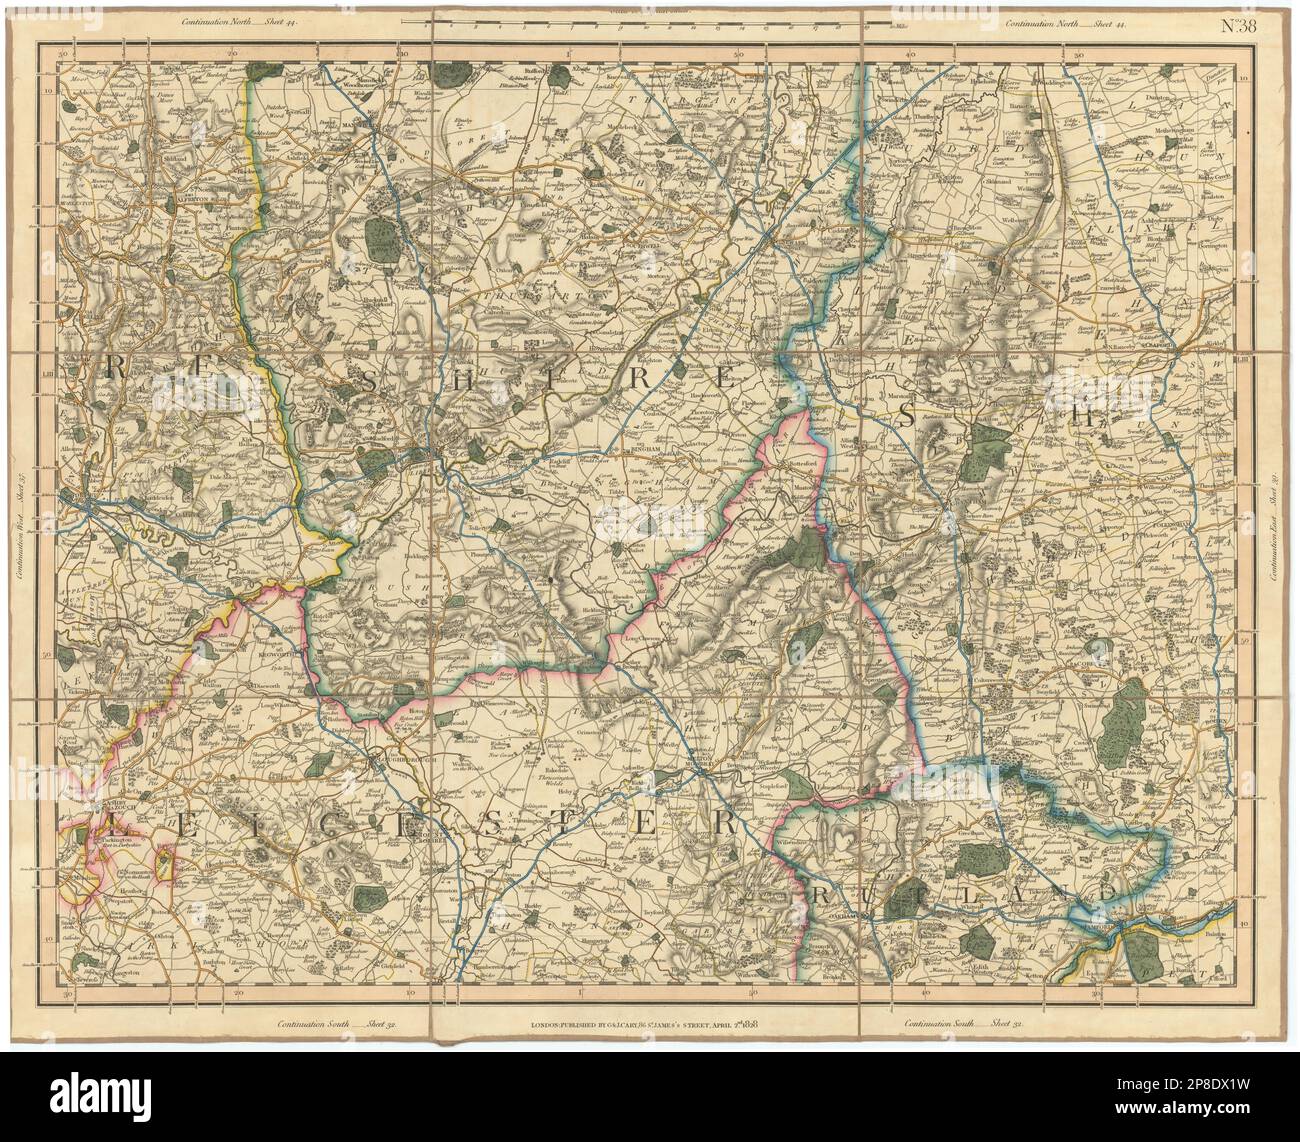 EAST MIDLANDS. Leicestershire Rutland Nottinghamshire Lincs Derbys CARY 1832 map Stock Photo